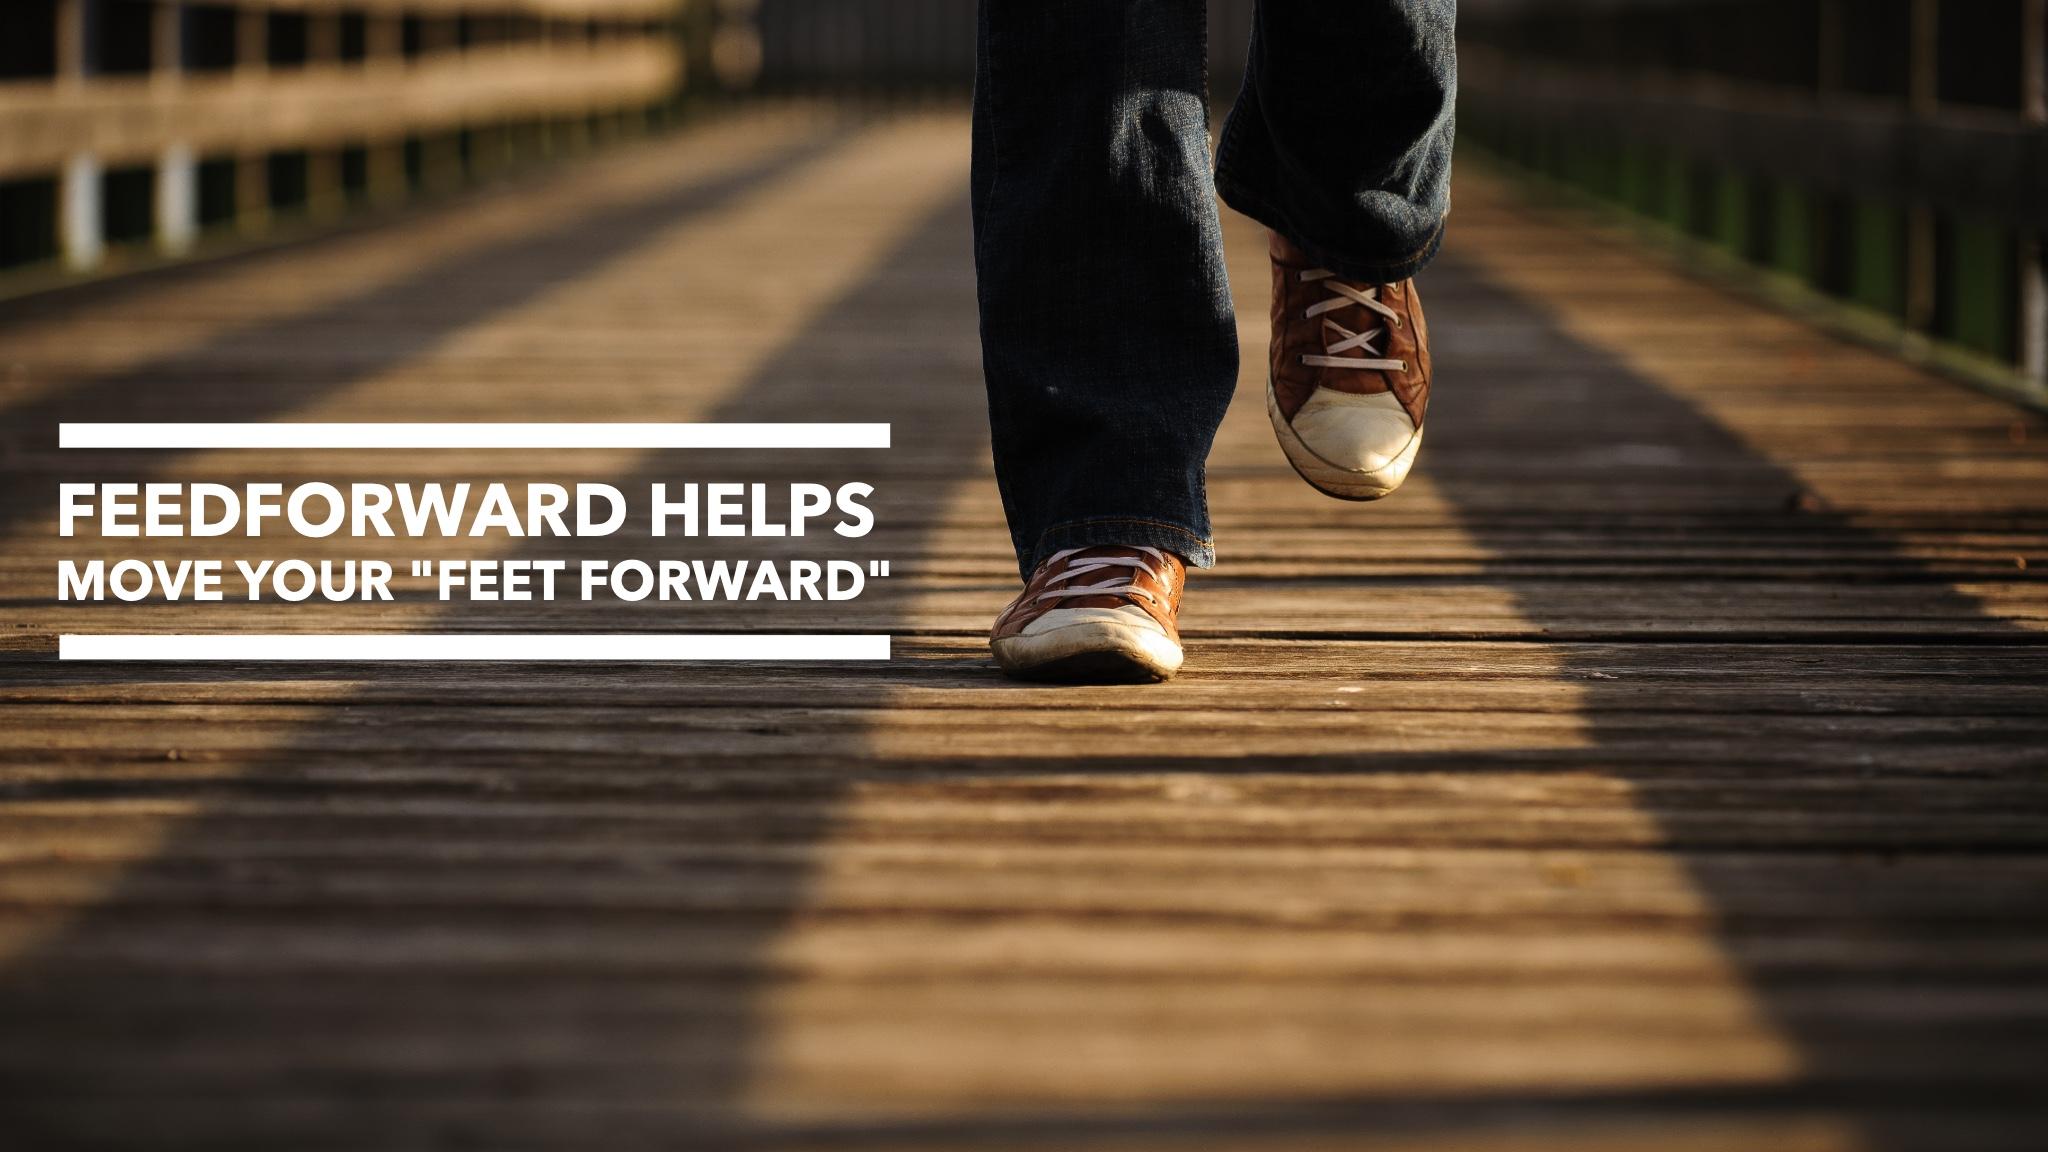 Try Feedforward to move forward